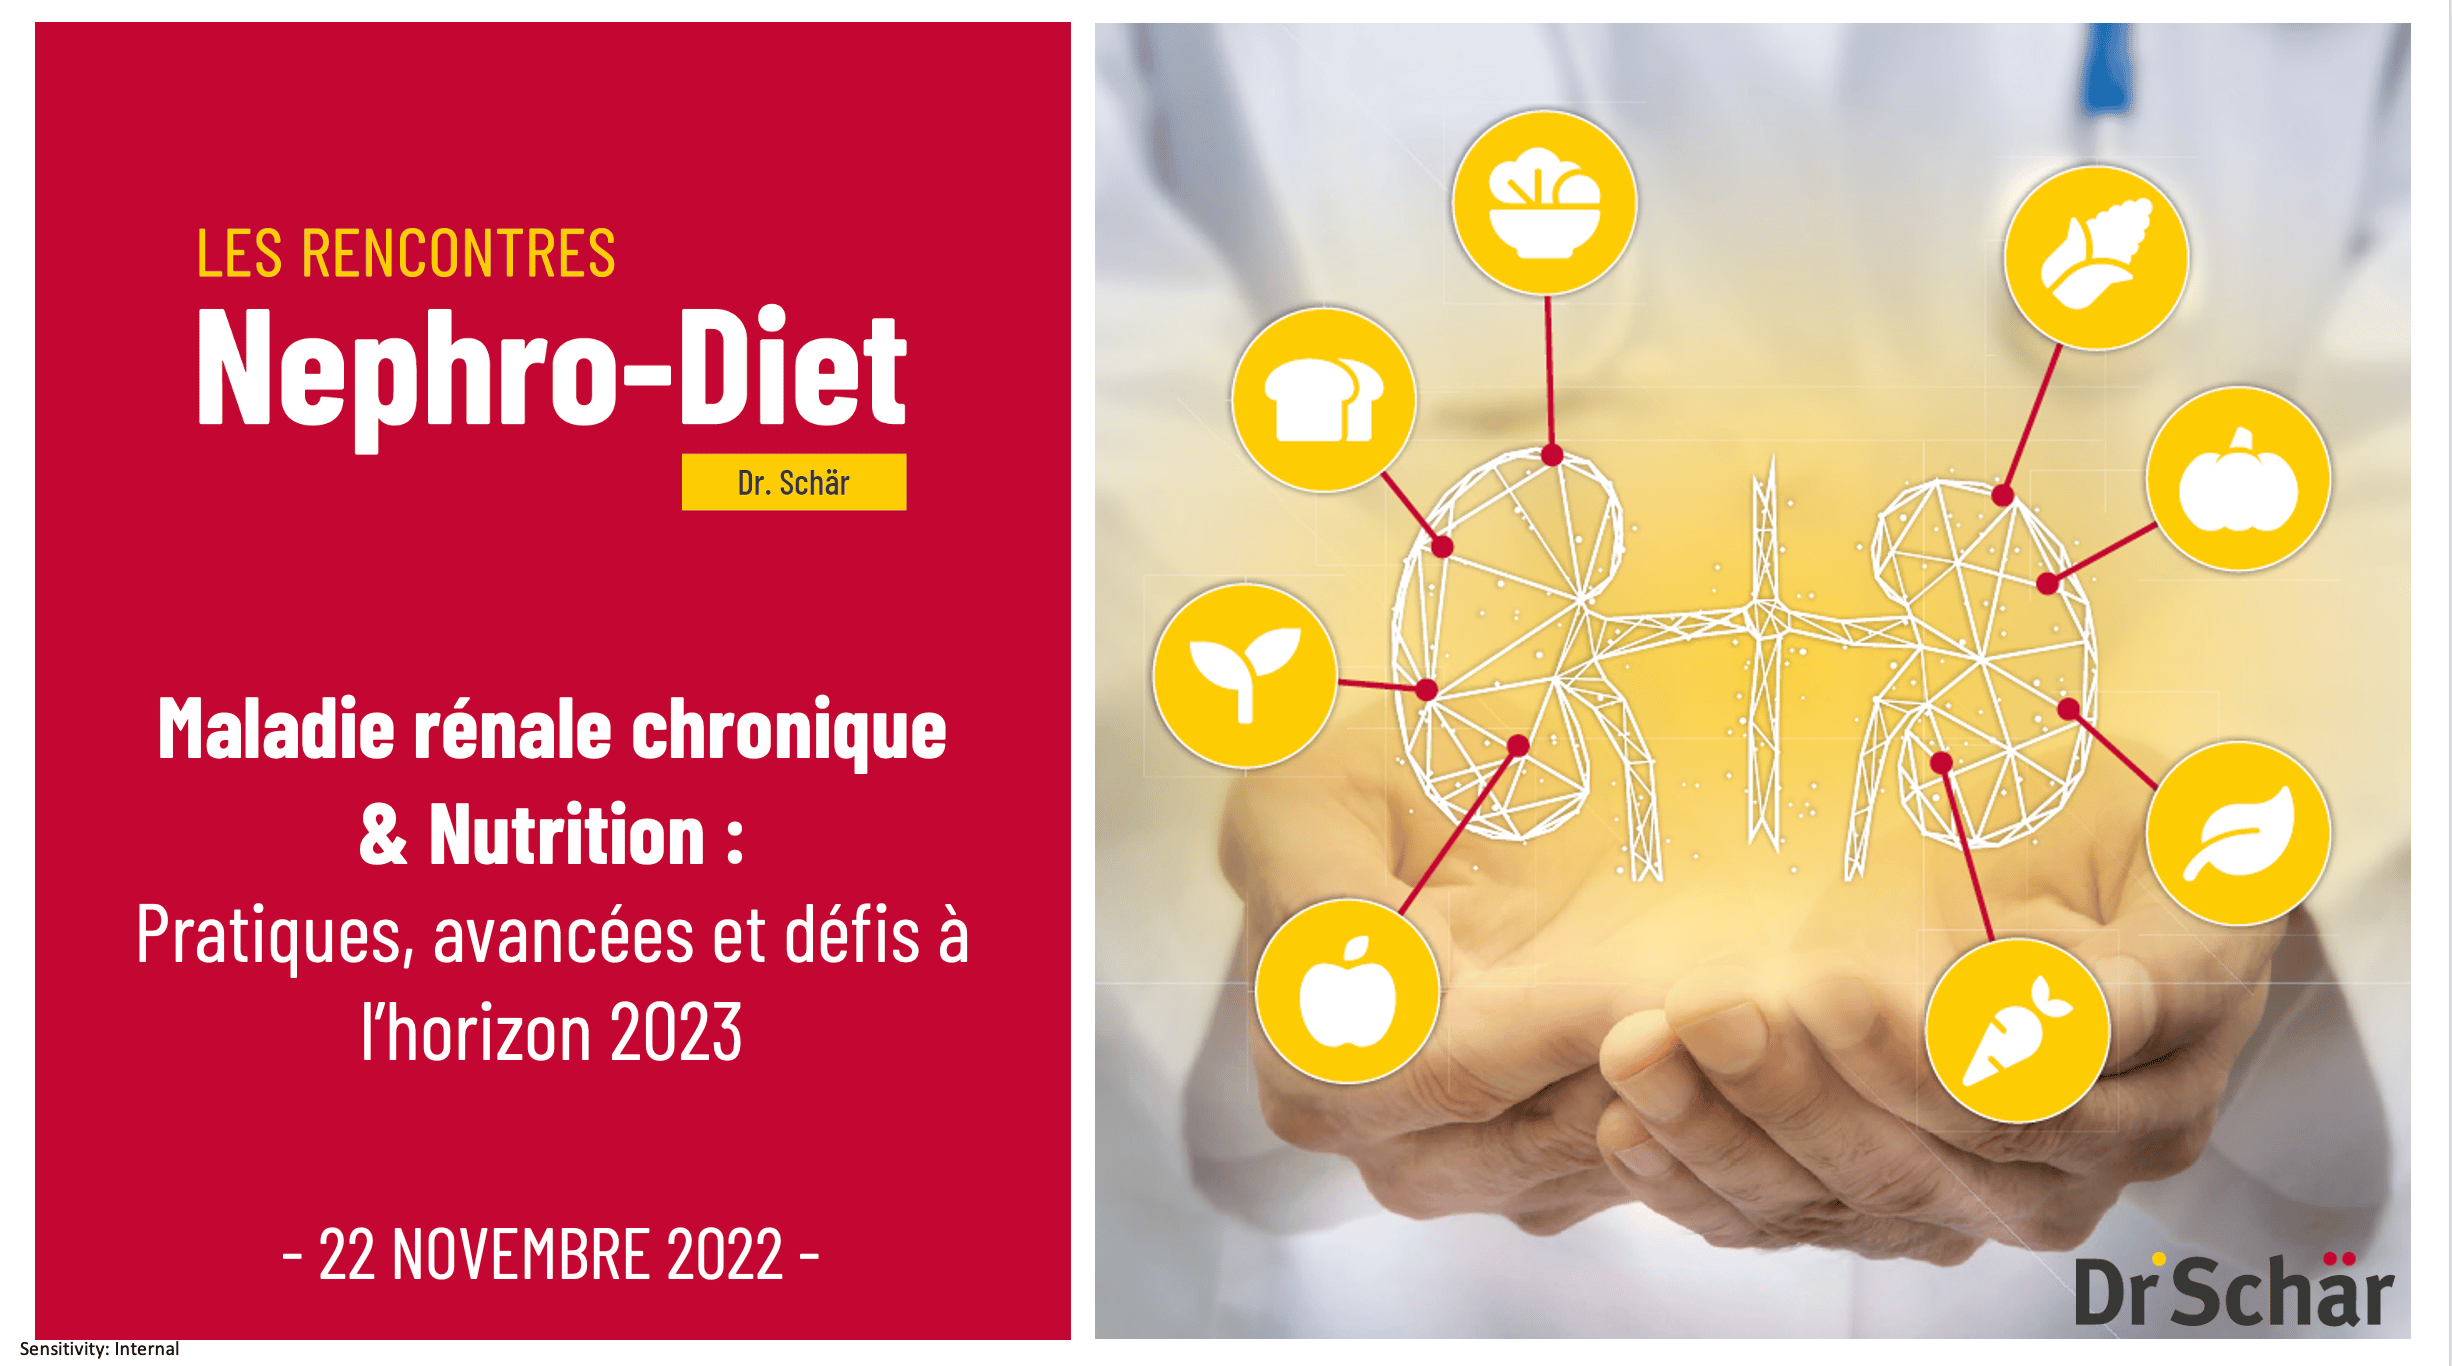 Rencontre Nephro-Diet / Edition 2022